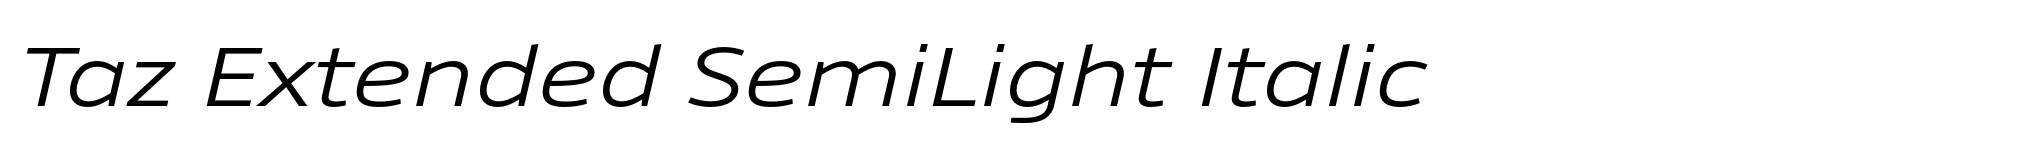 Taz Extended SemiLight Italic image